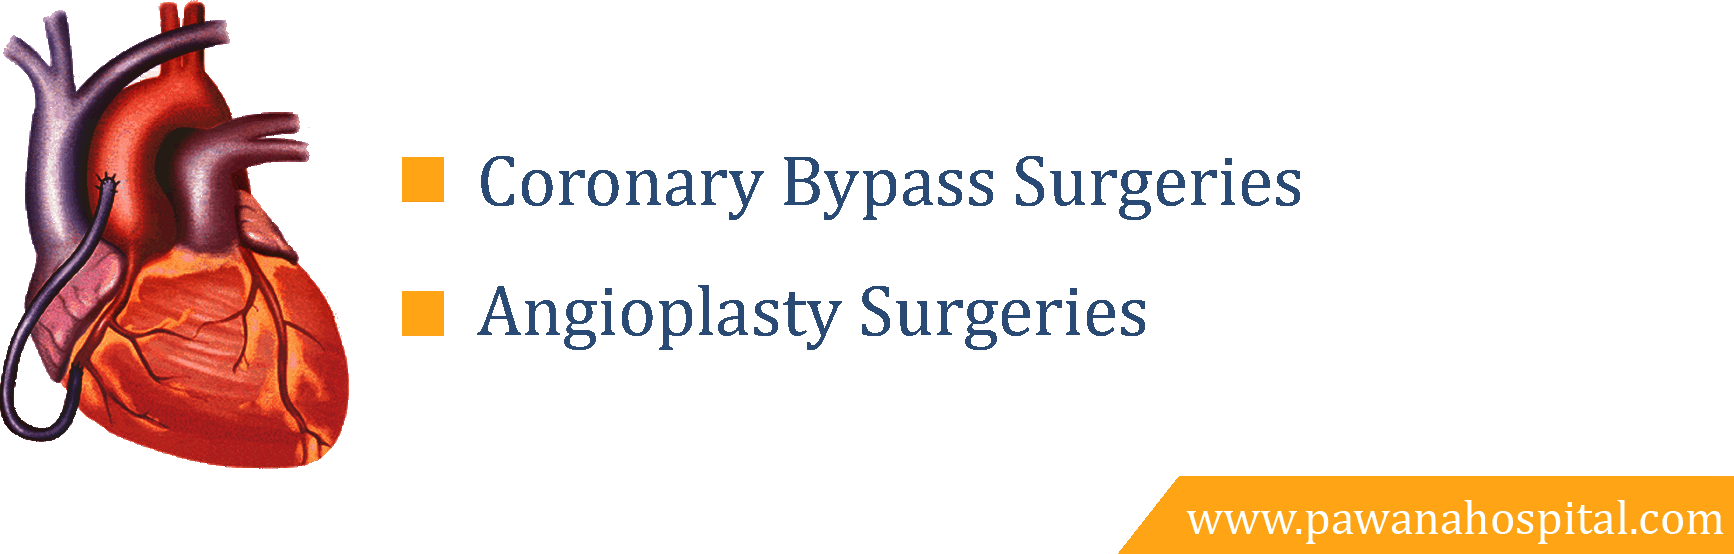 bypass surgeries in pune | Angioplasty Surgeries | pawana hospital